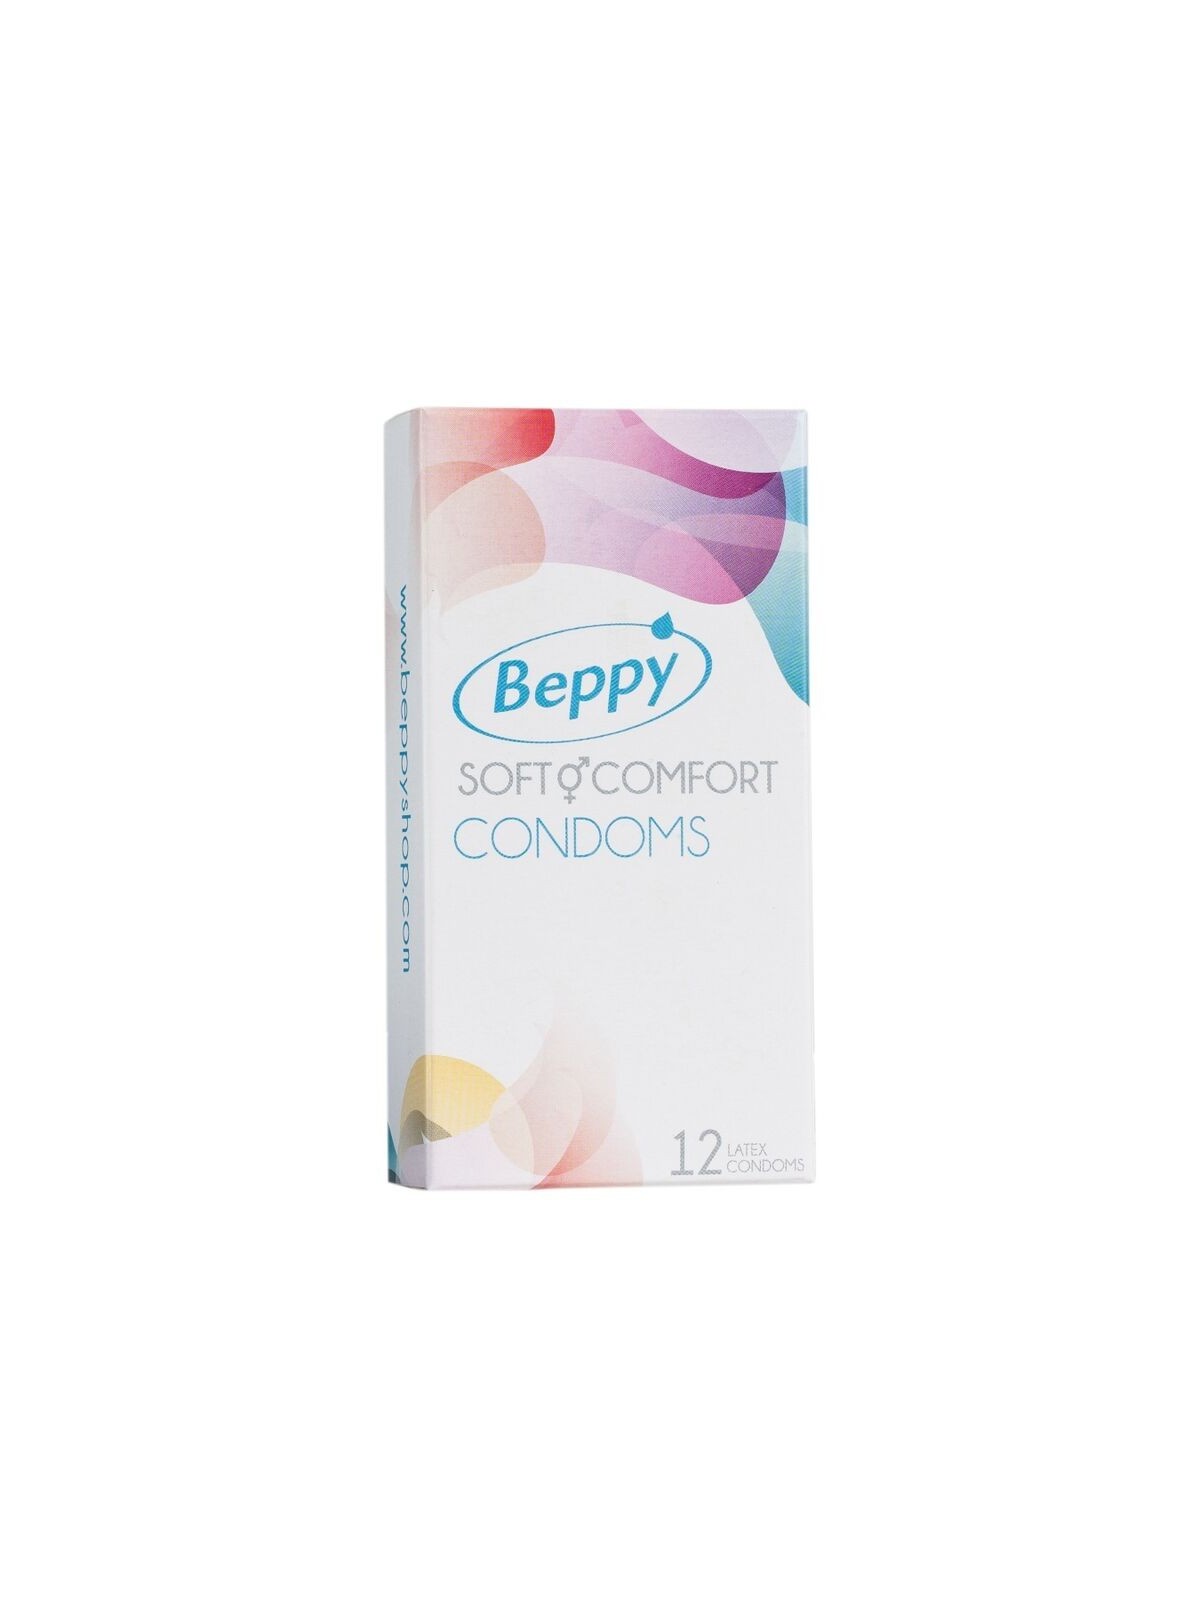 Beppy Soft And Comfort Preservativos - Comprar Condones naturales Beppy - Preservativos naturales (1)